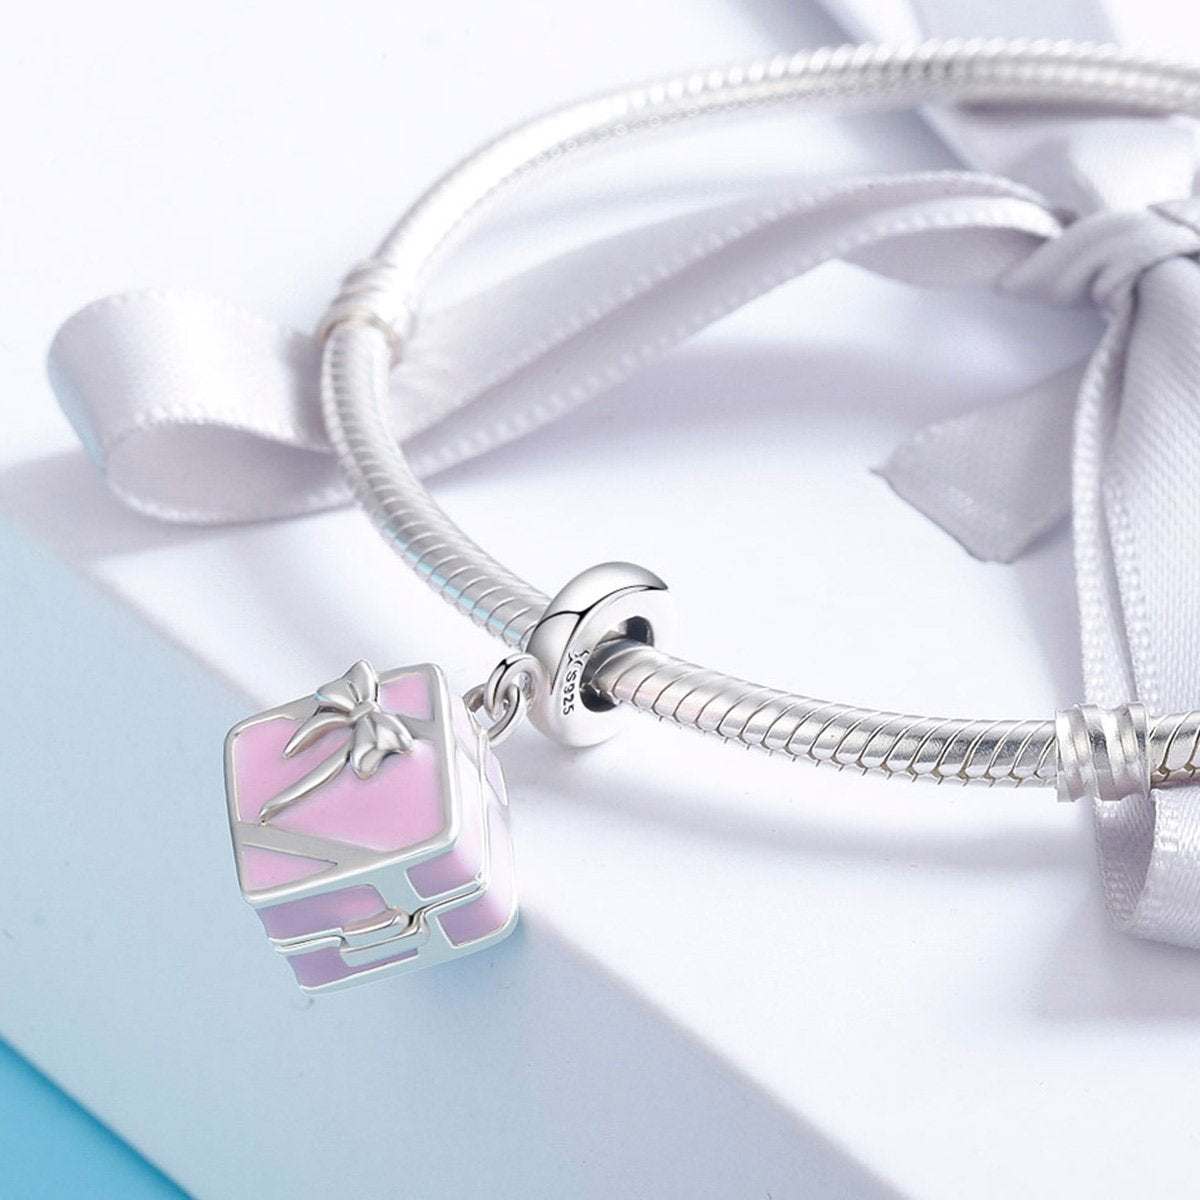 Sterling 925 silver charm the pink ring box bead pendant fits Pandora charm and European charm bracelet Xaxe.com